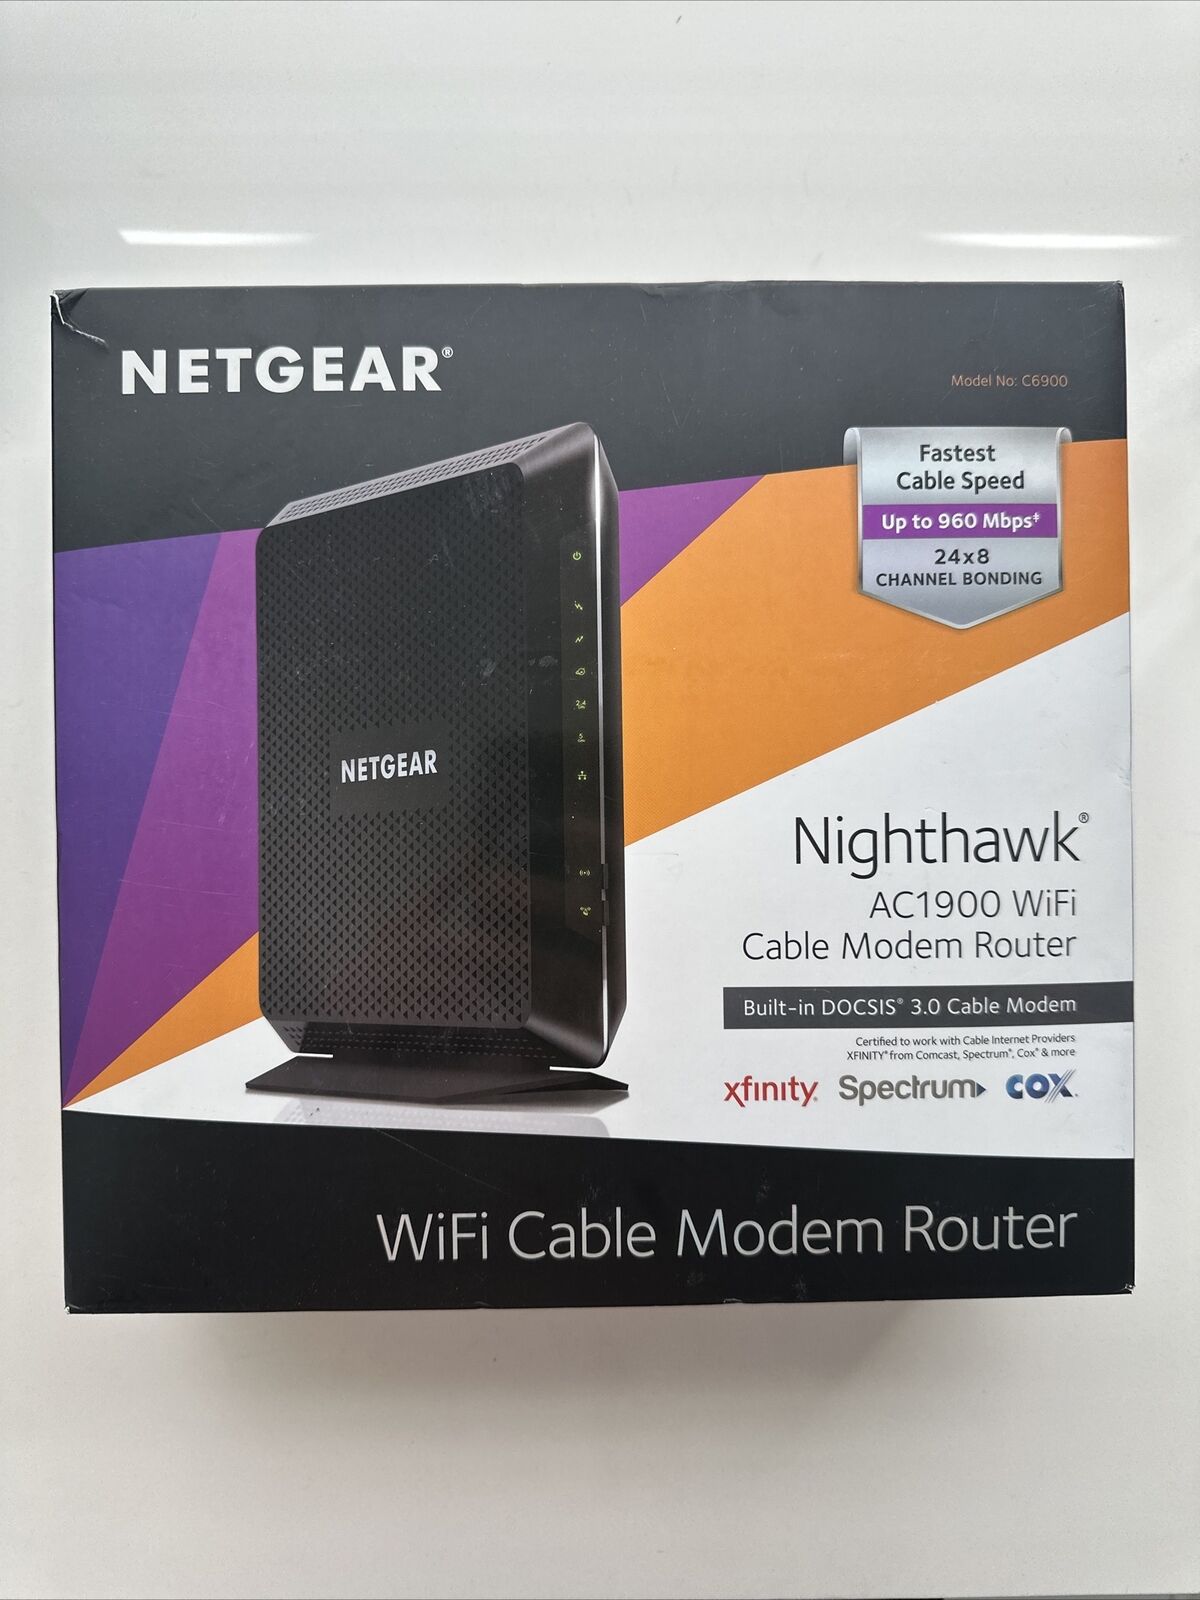 NETGEAR Nighthawk AC1900 C6900 WiFi Cable Modem Router